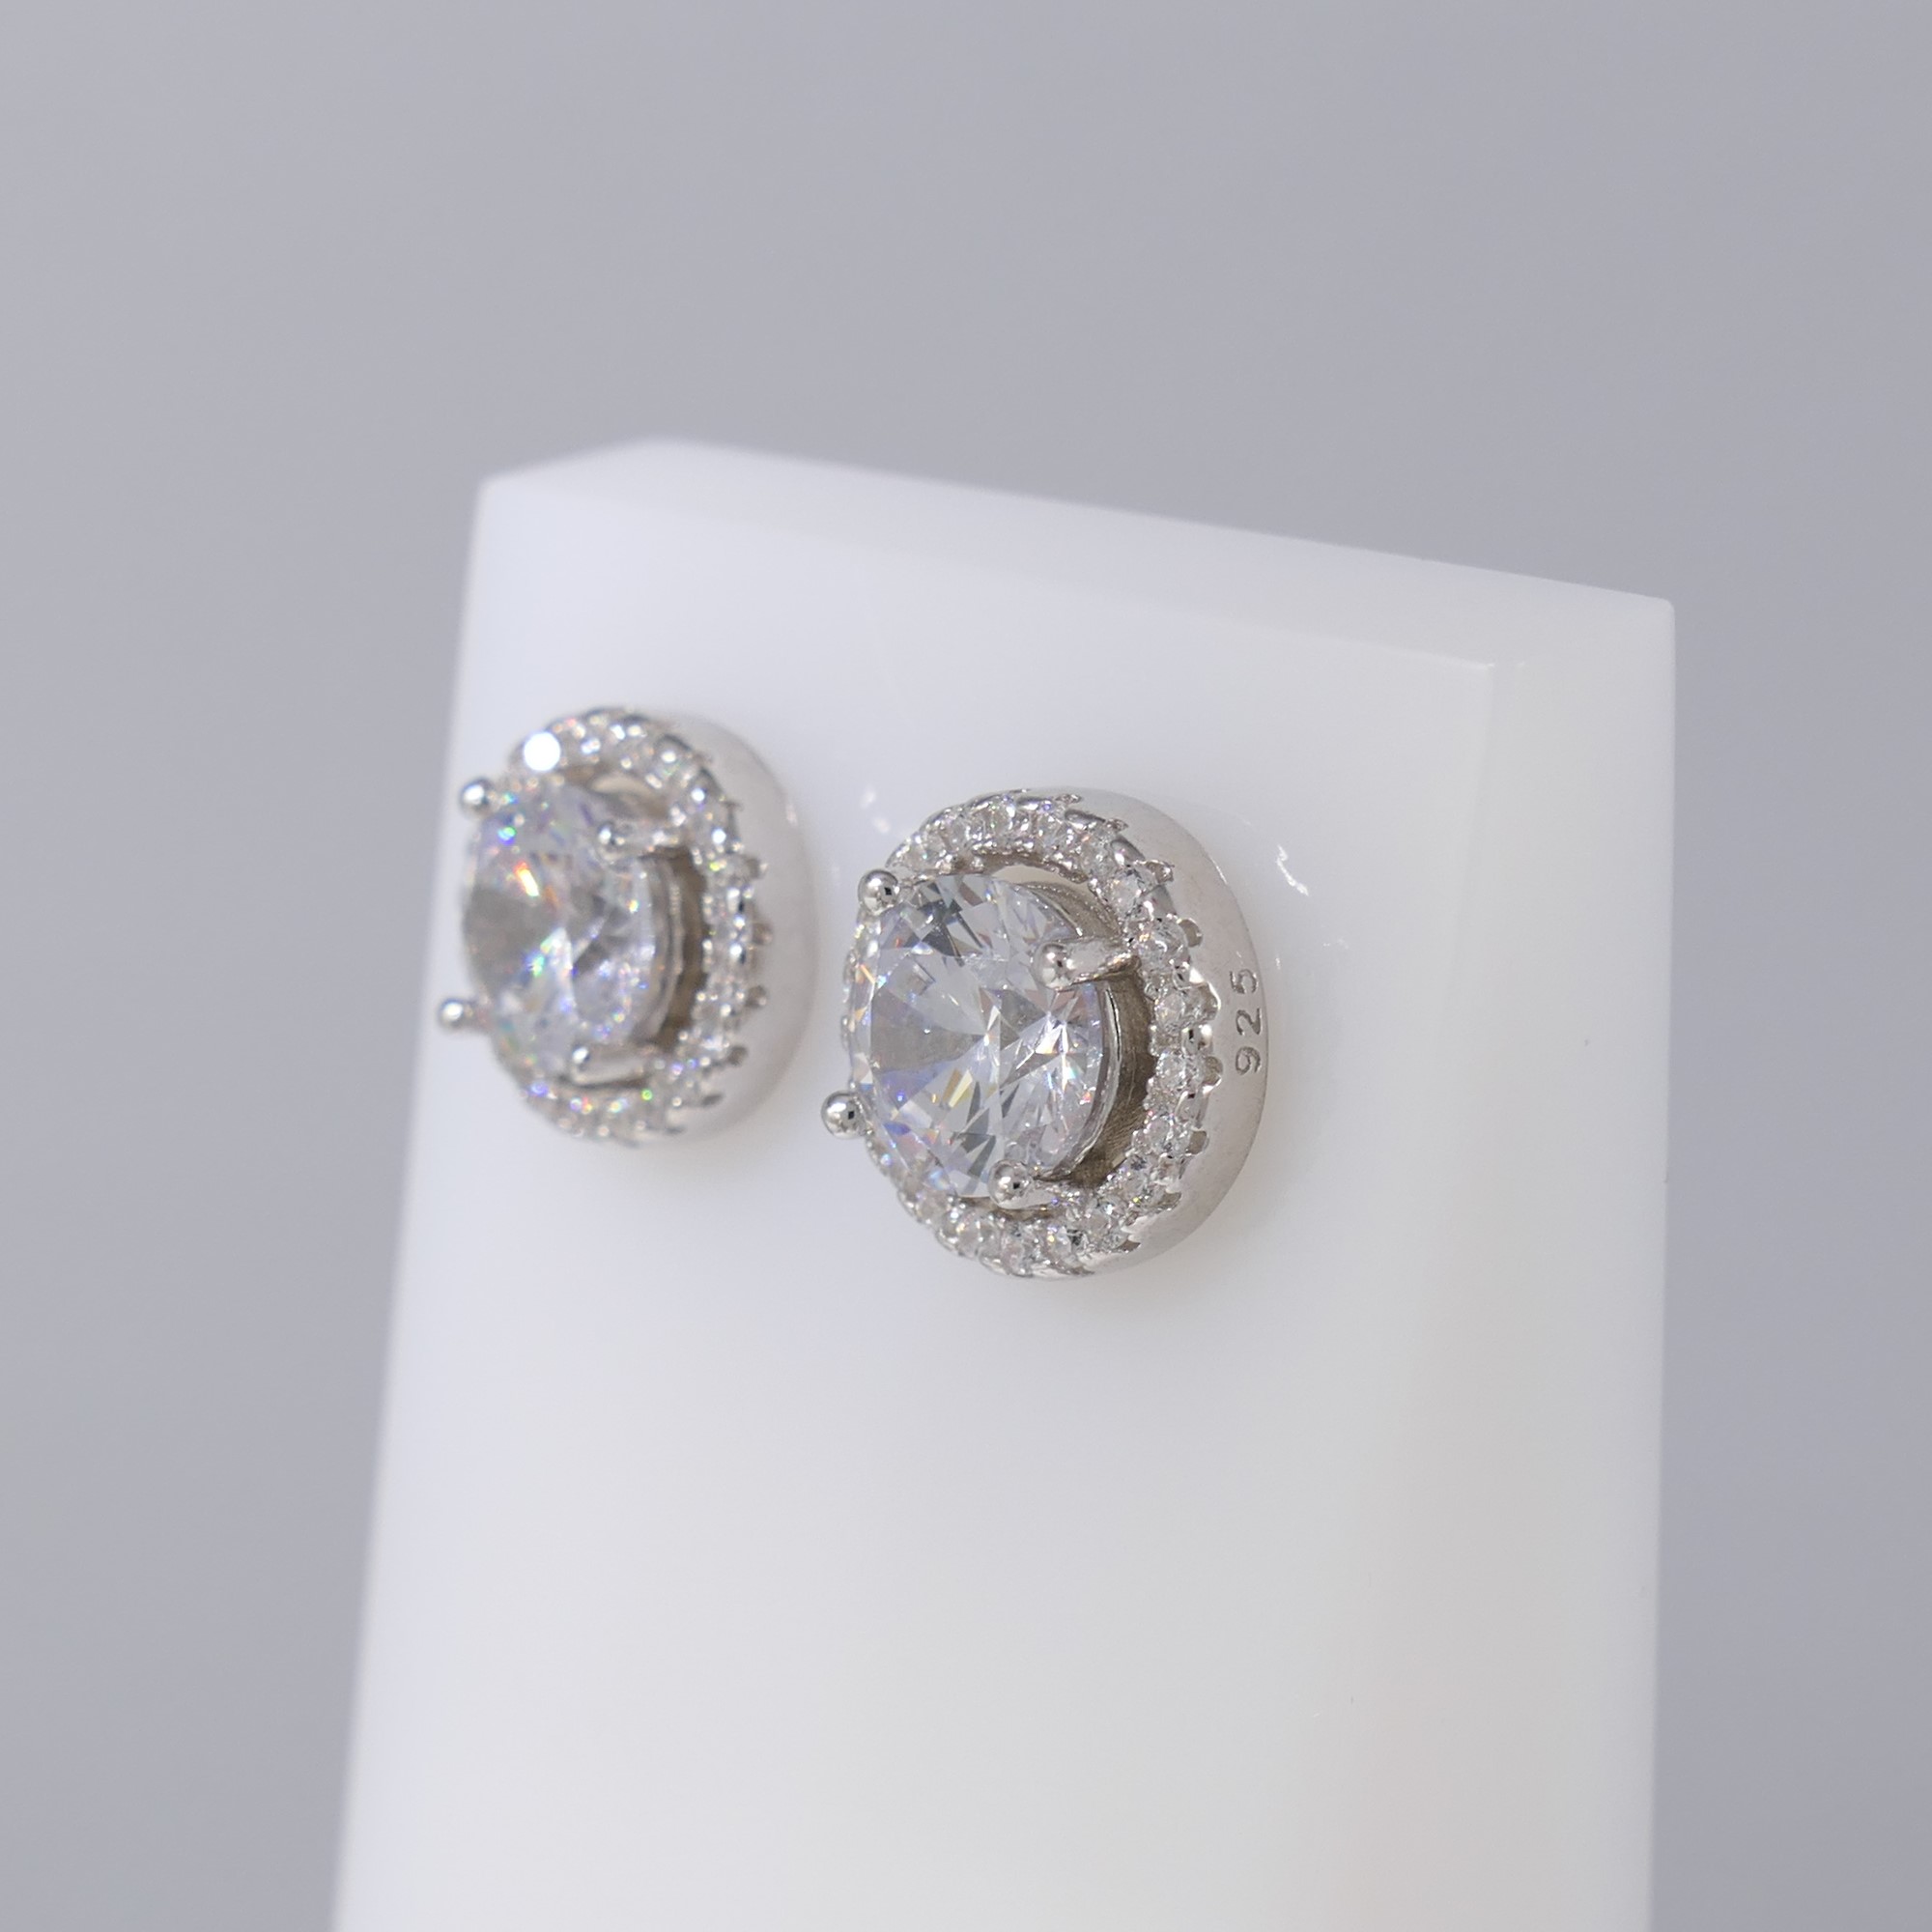 Pair of Sterling Silver Halo Stud Earrings - Image 4 of 6